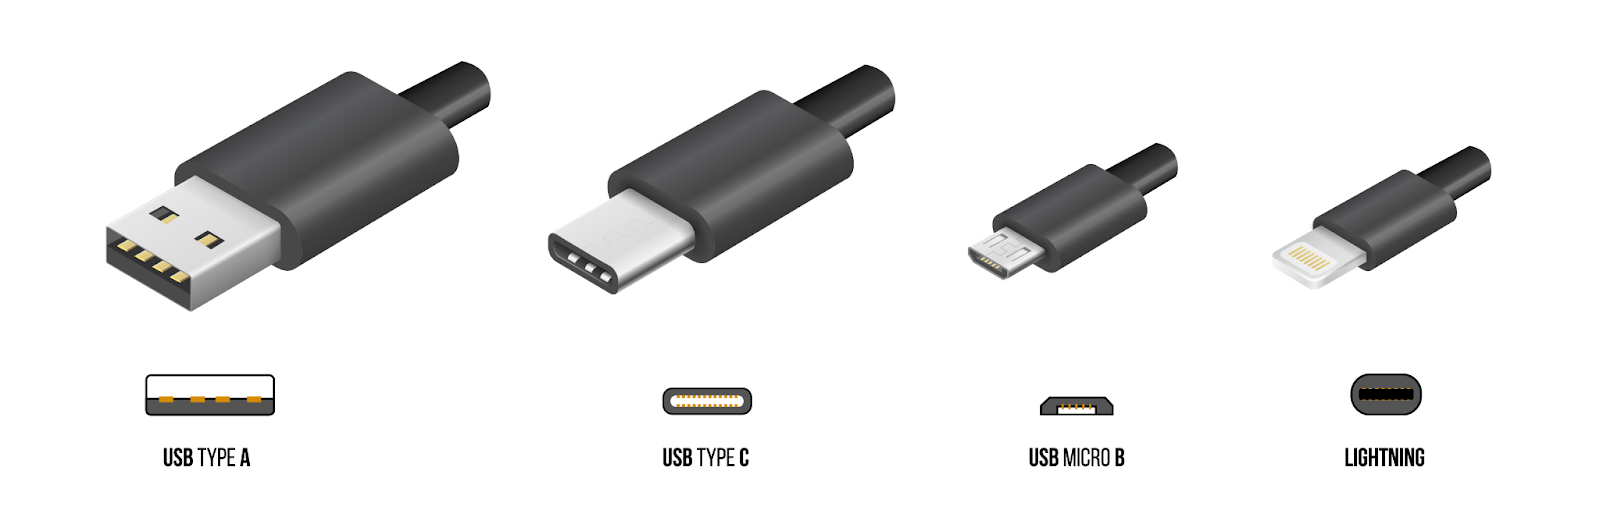 to USB-A, USB-C, Lightning, and Micro-USB ports